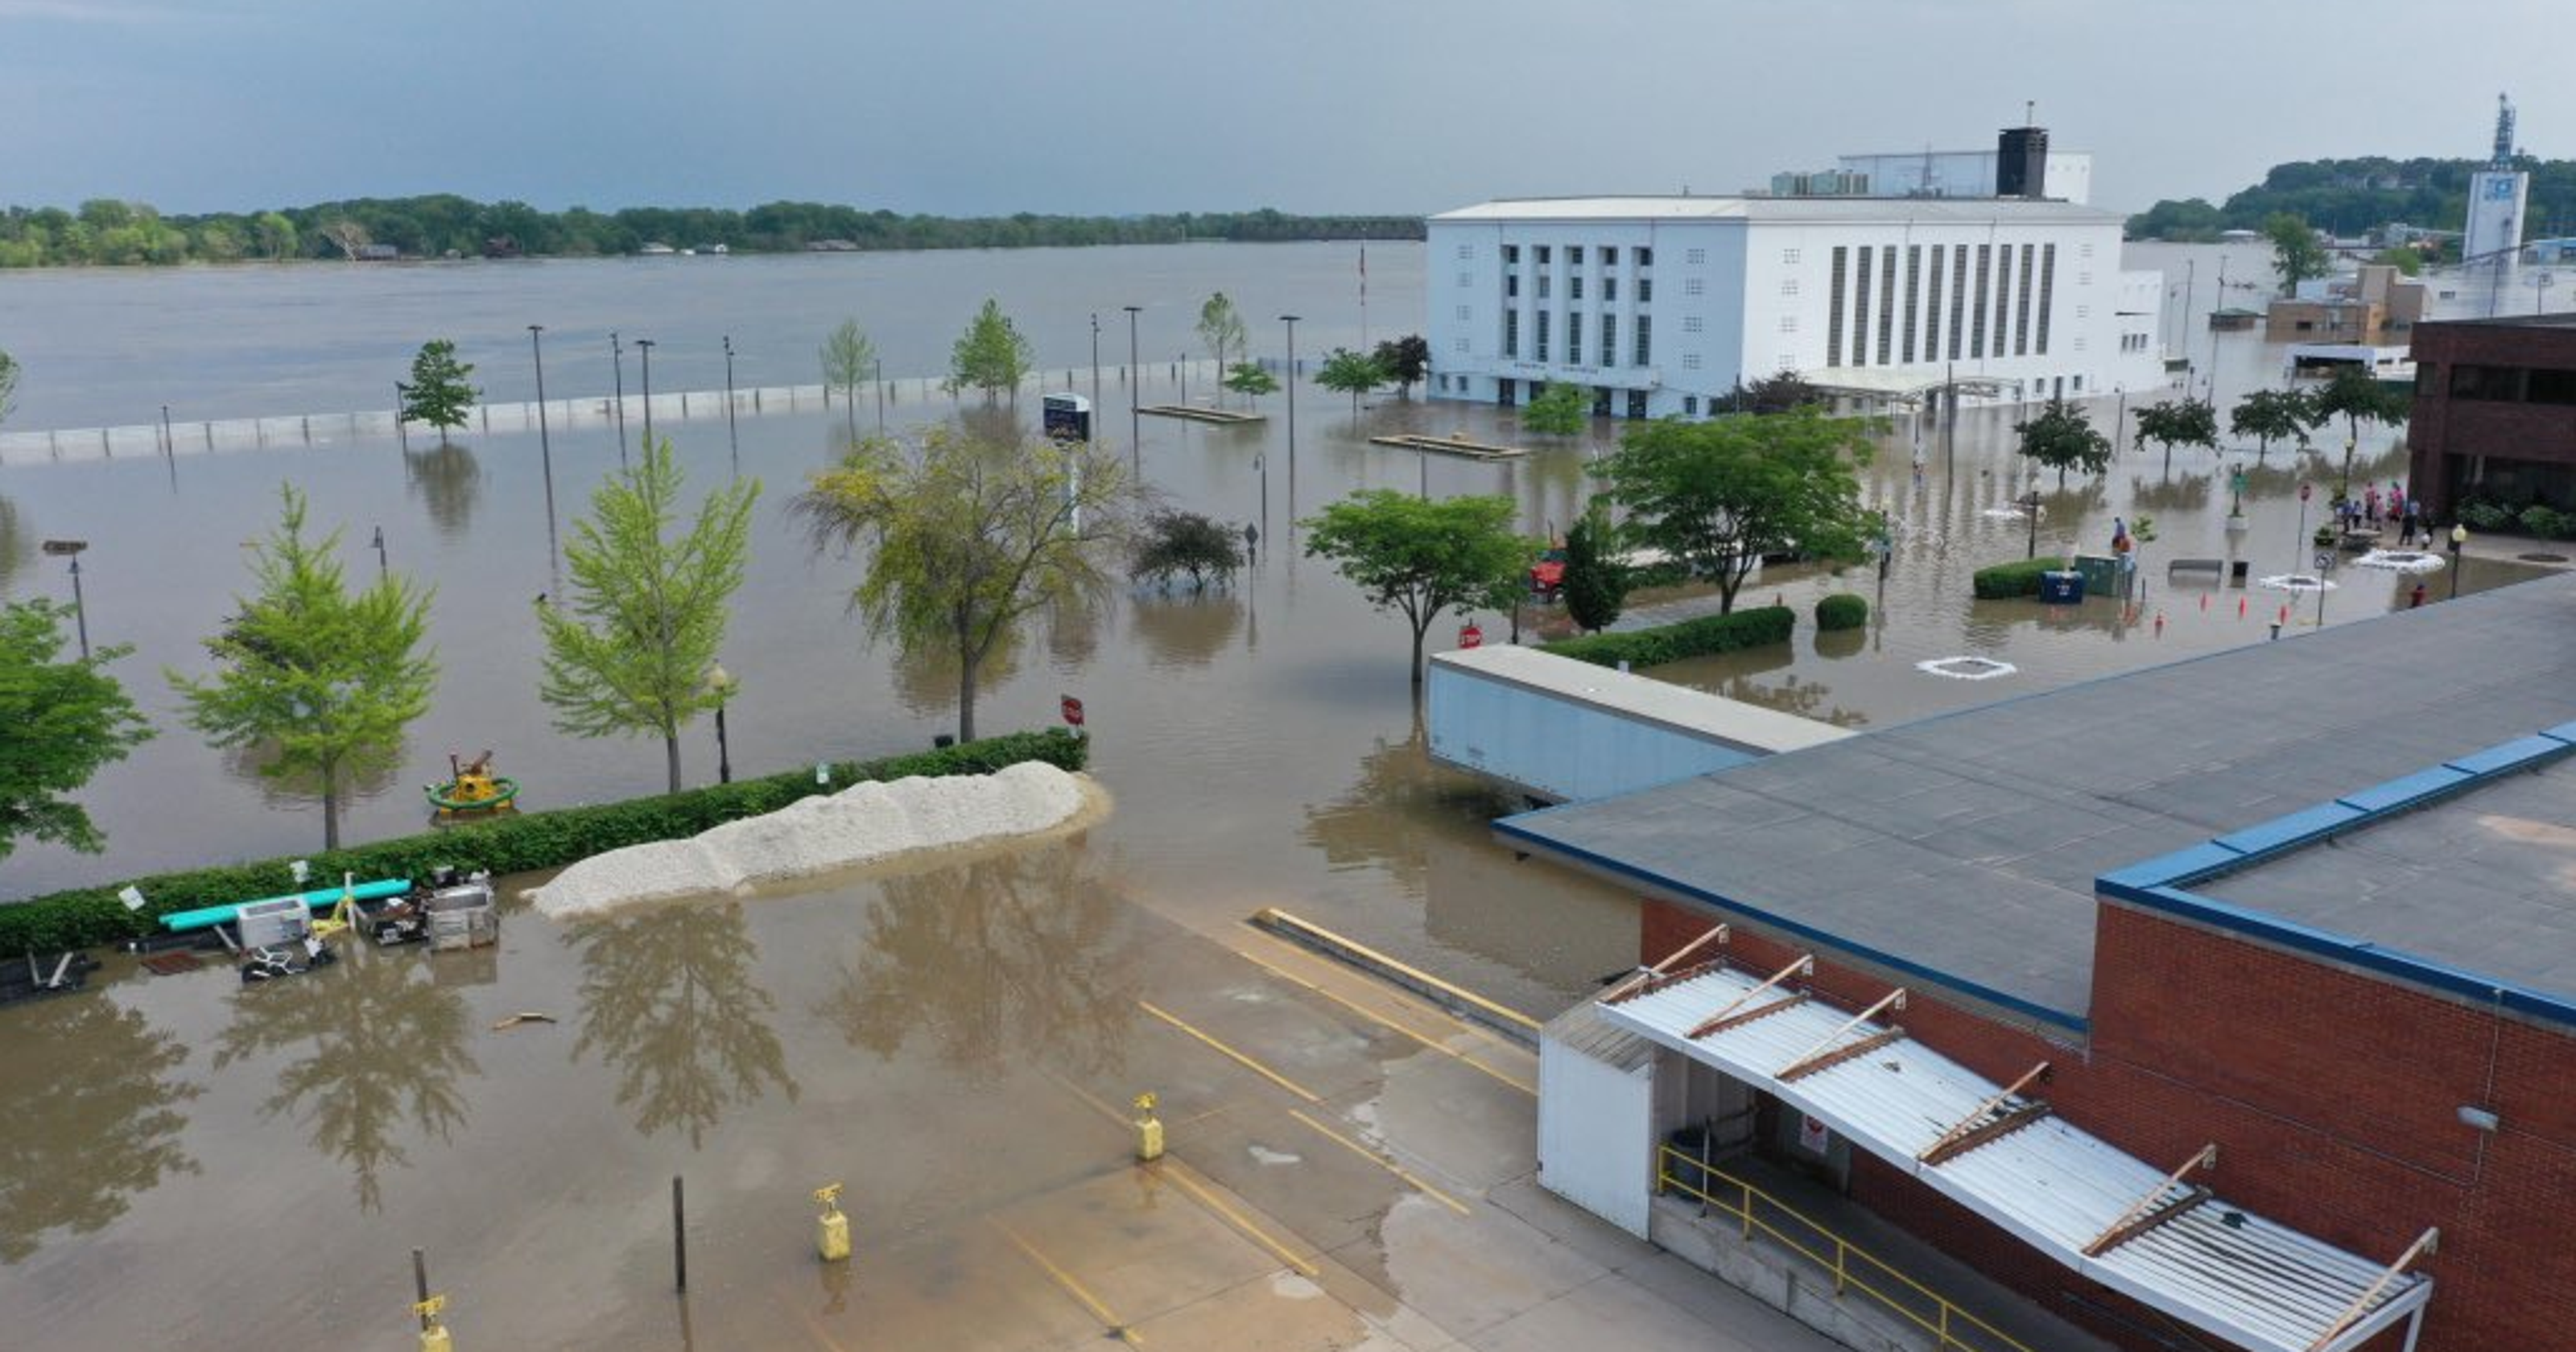 Burlington flooding HESCO barrier fails, downtown overrun with water